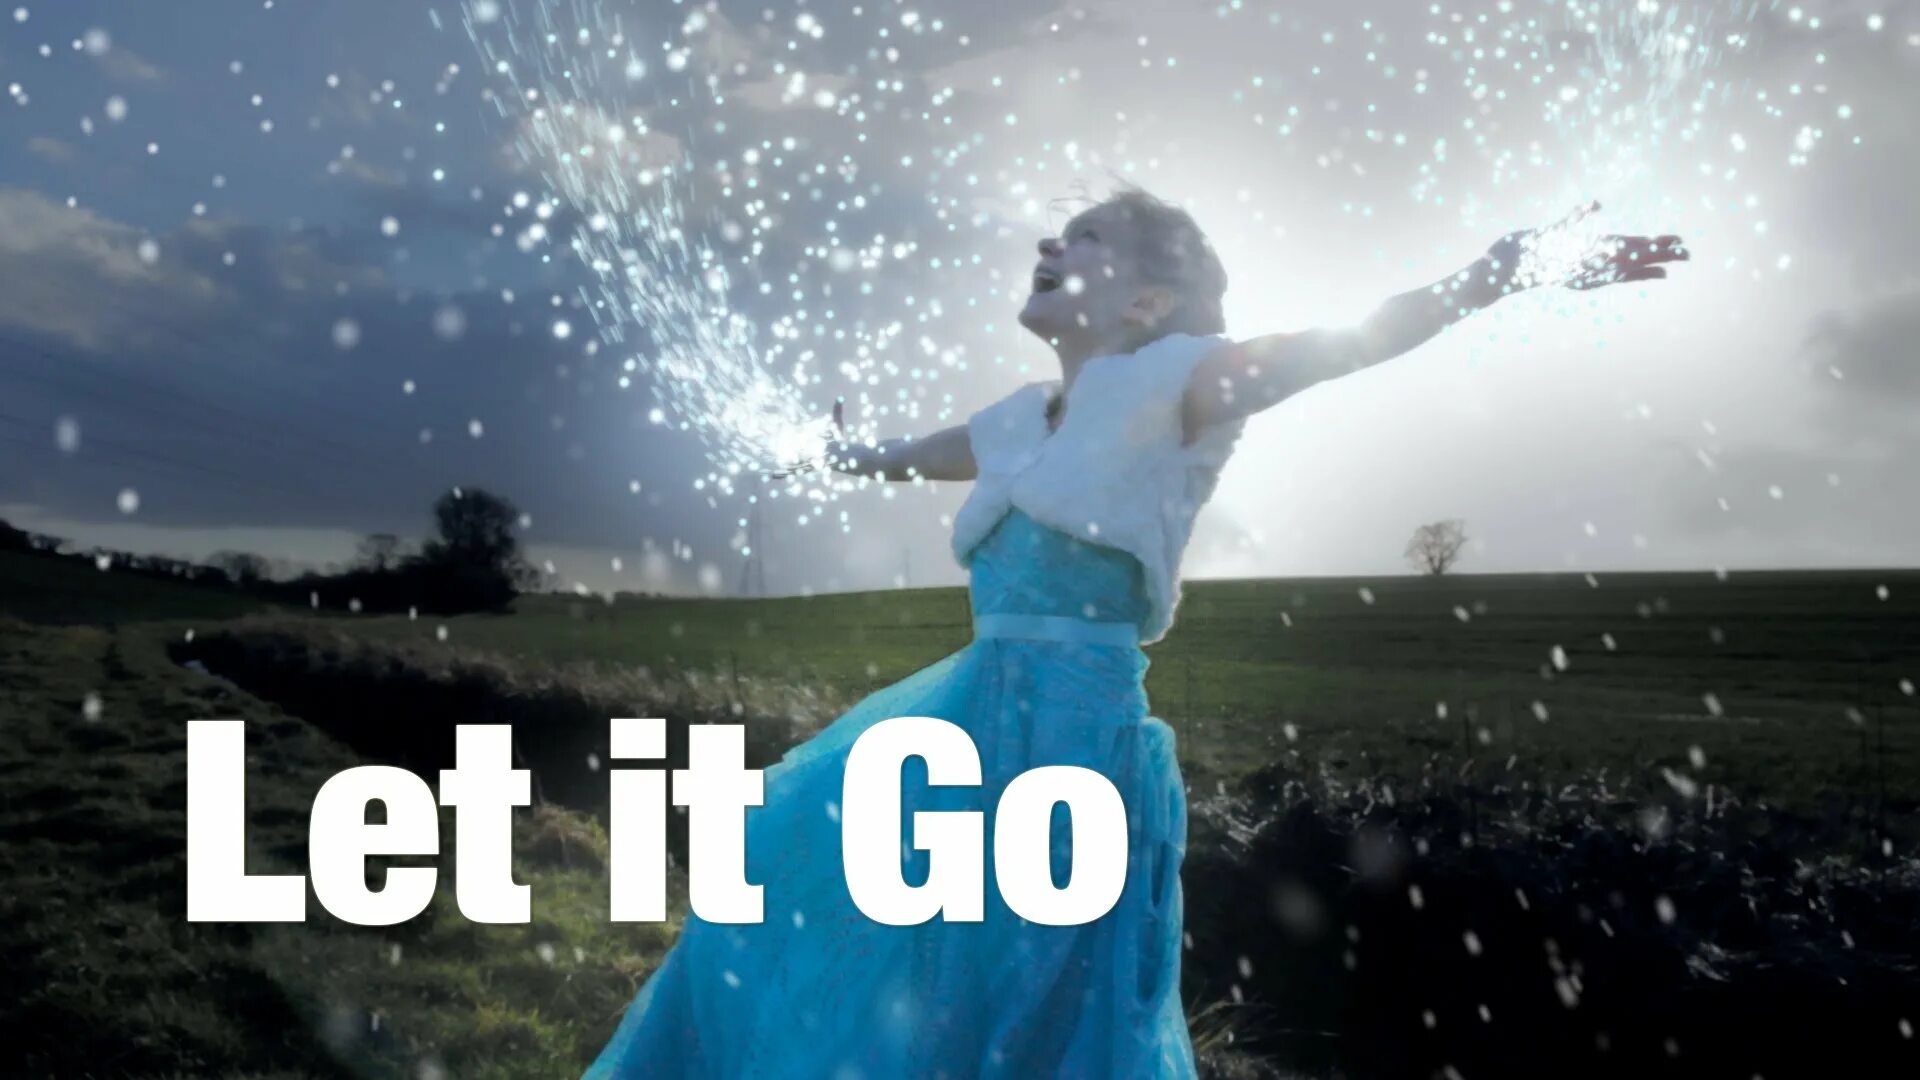 Включи let it go. Let it go. День без обид (Let it go Day). Let it go обложка. Let it go картинка.